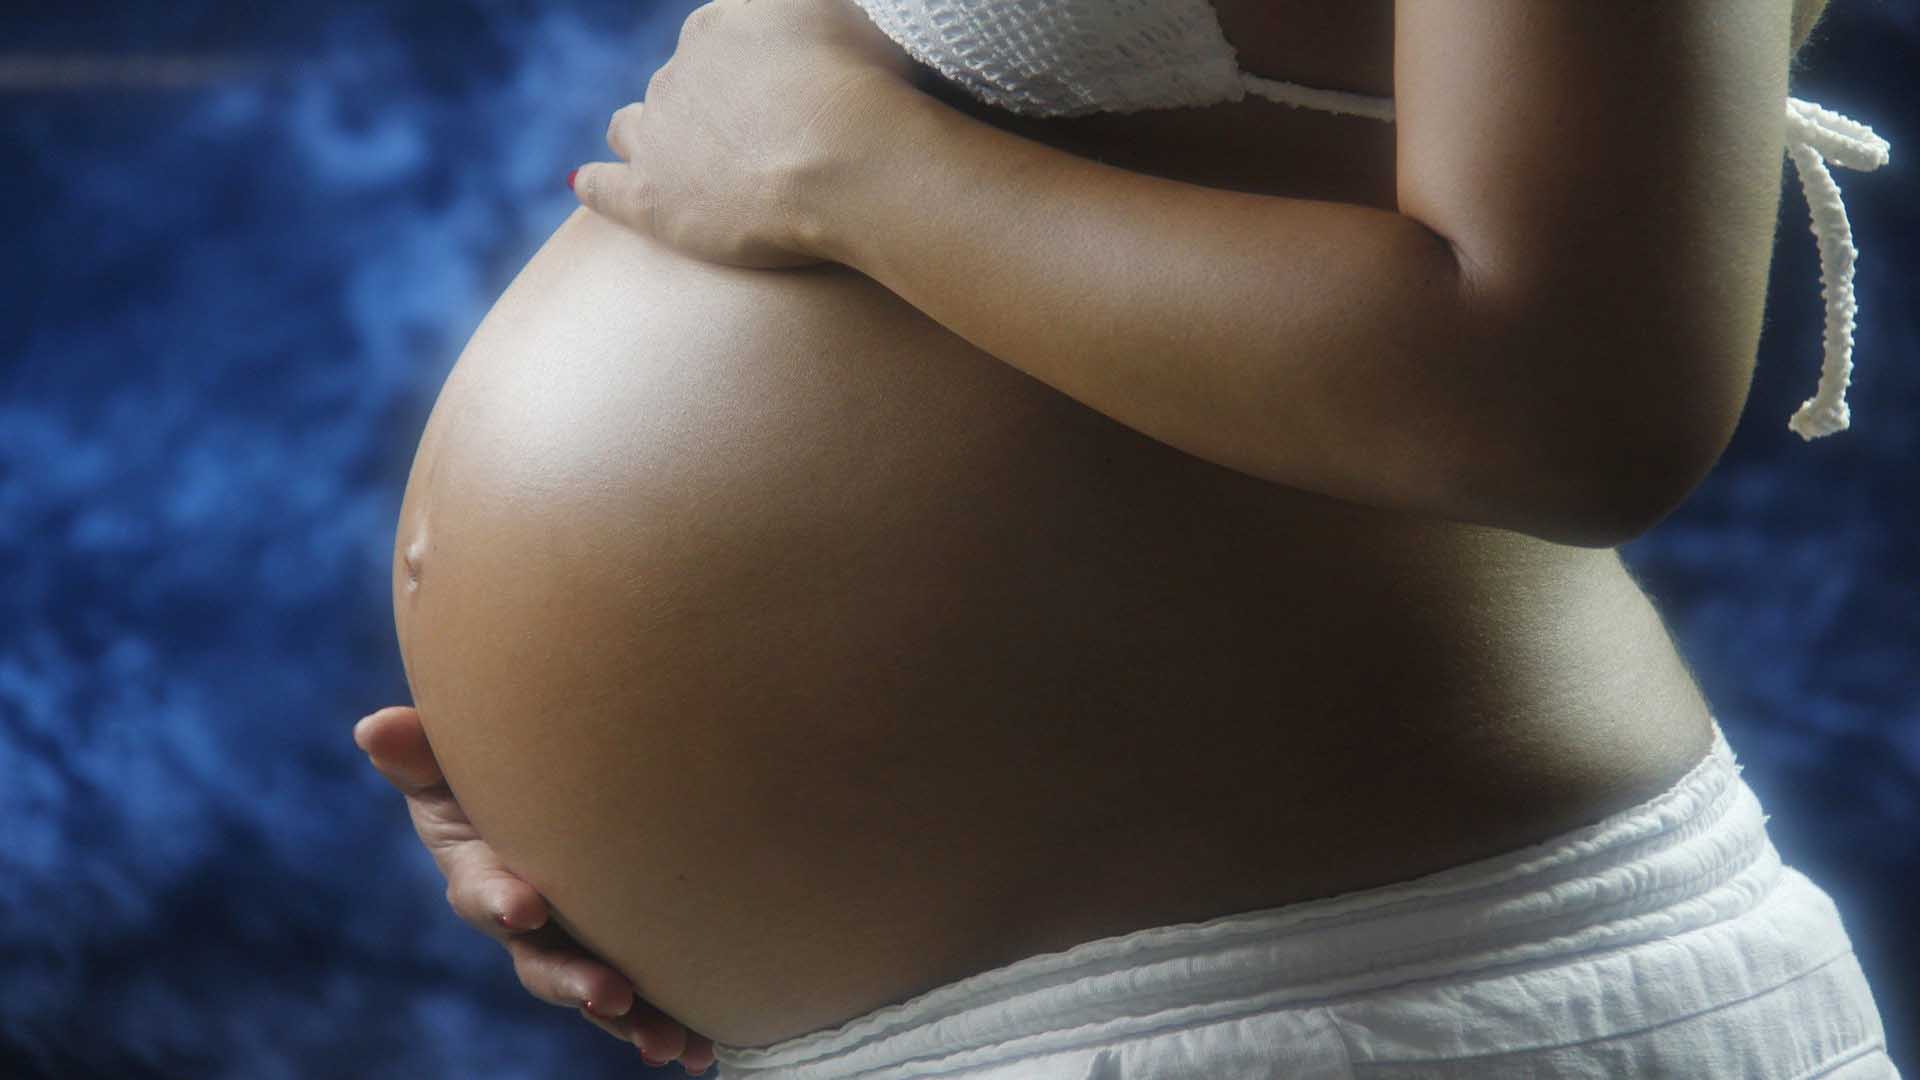 Gimnasia Prenatal